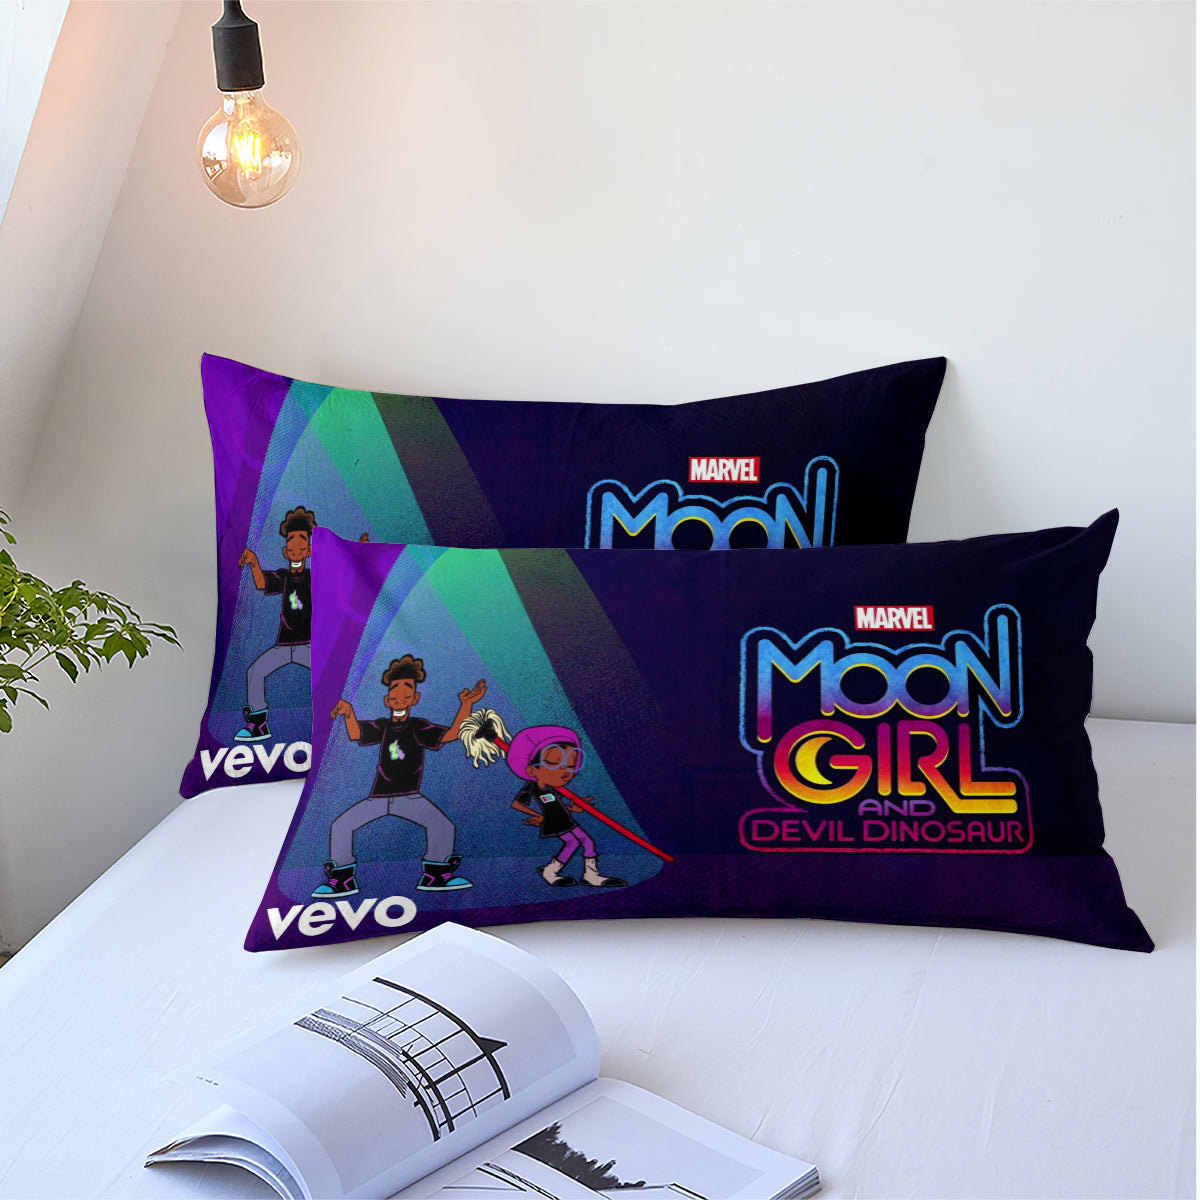 Moon Girl and Devil Dinosaur #2 3D Printed Duvet Cover Quilt Cover Pillowcase Bedding Set Bed Linen Home Decor